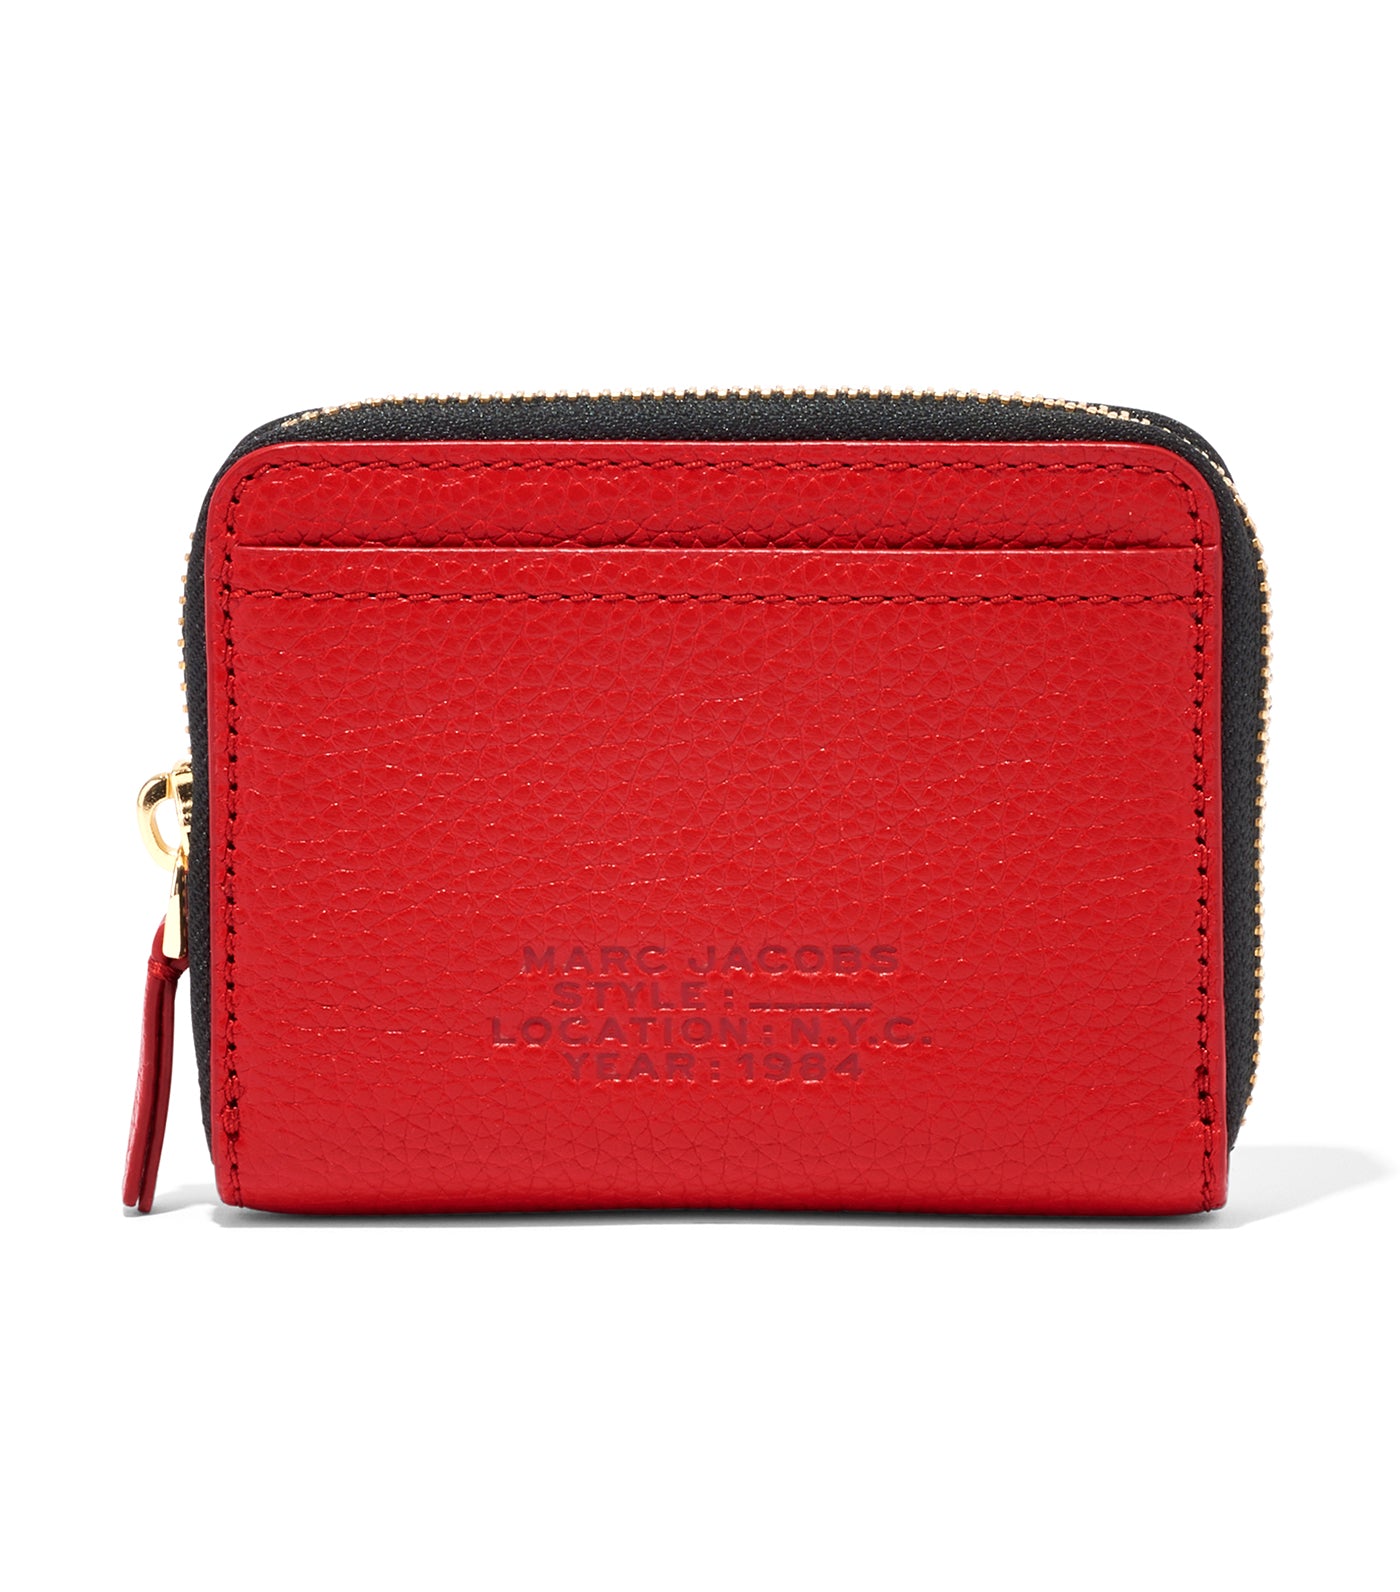 The Leather Zip Around Wallet True Red